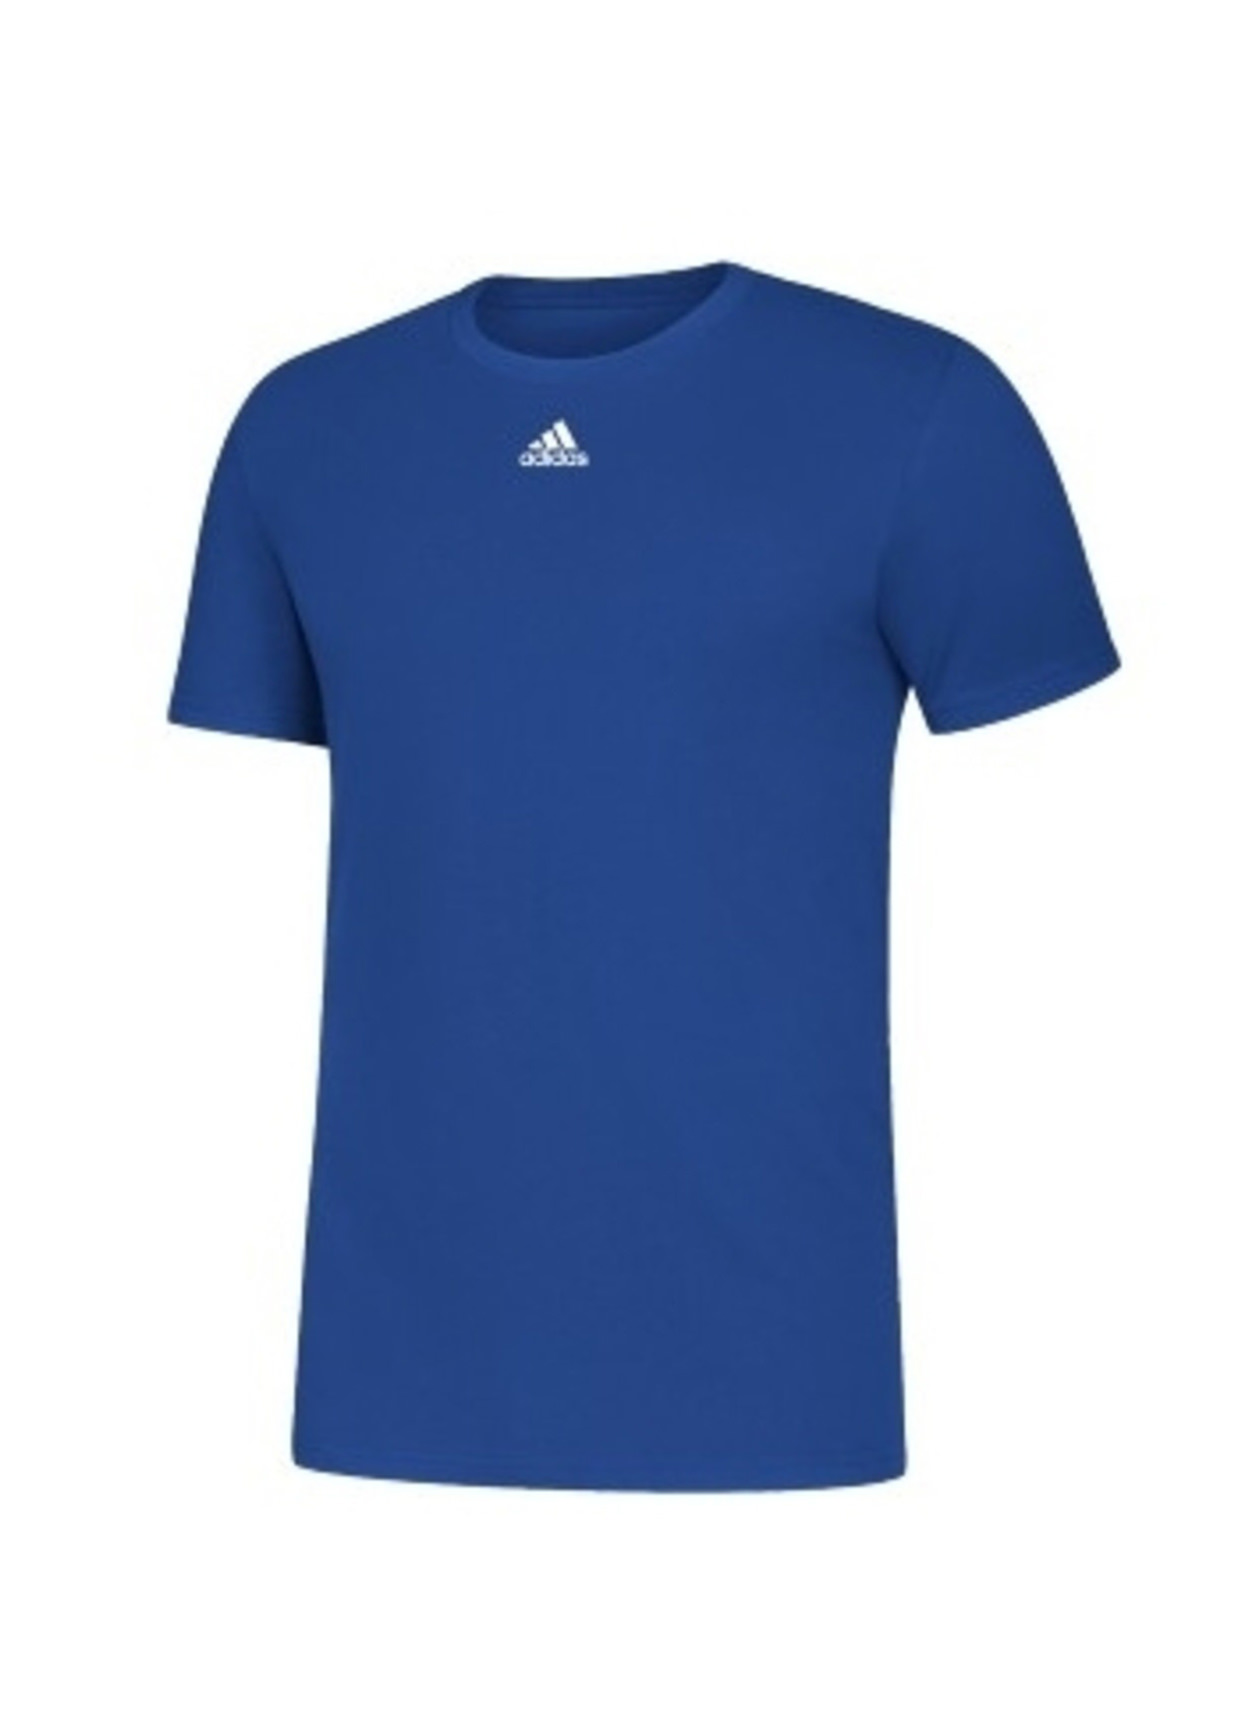 Adidas Royal Men's Amplifier T-Shirt | Adidas